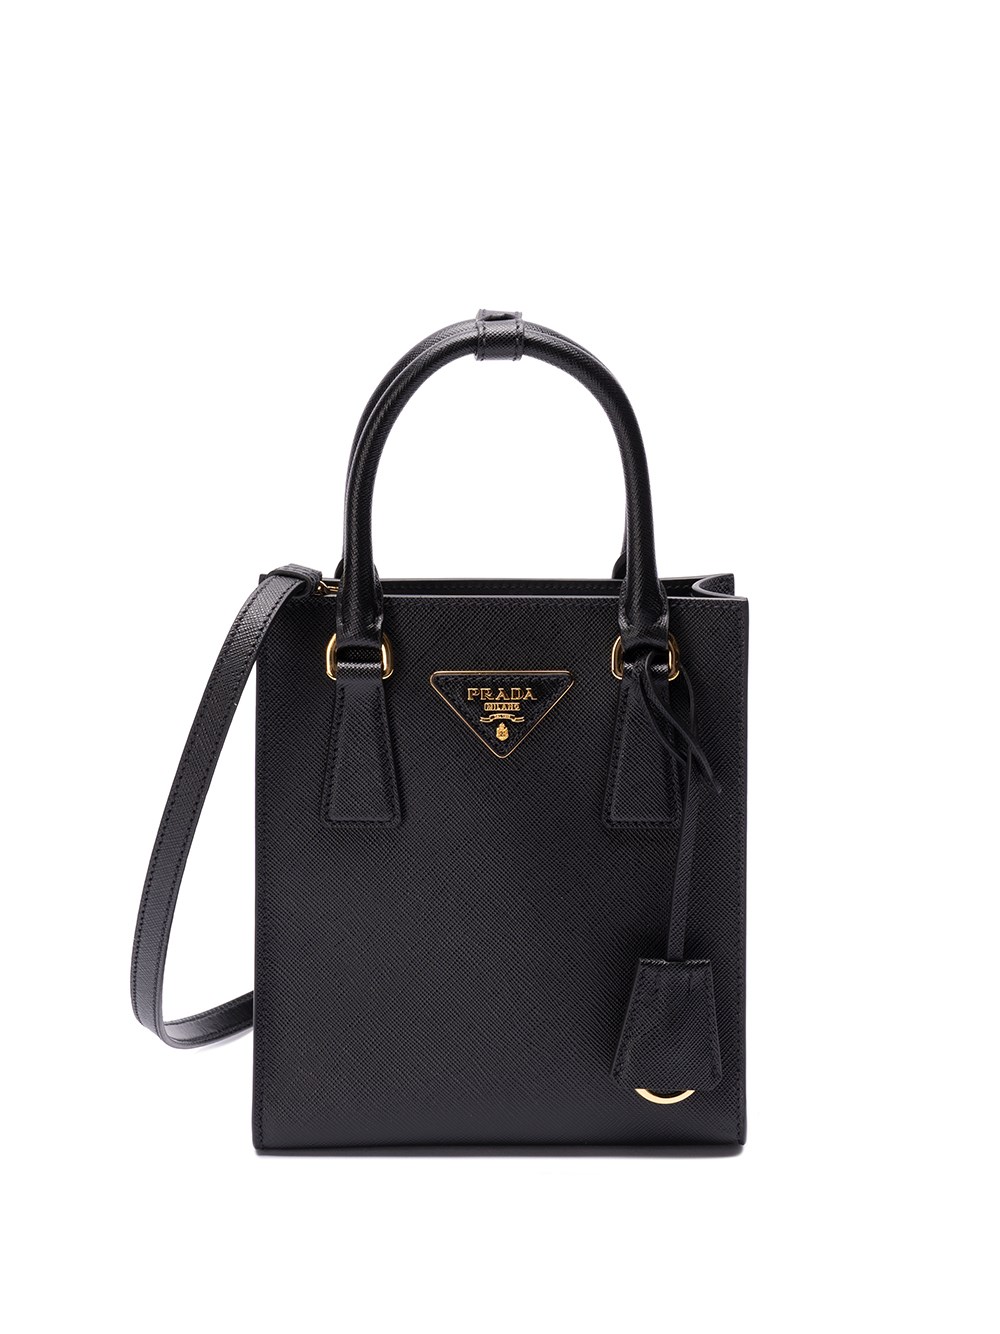 Prada Saffiano Leather Handbag In Black  